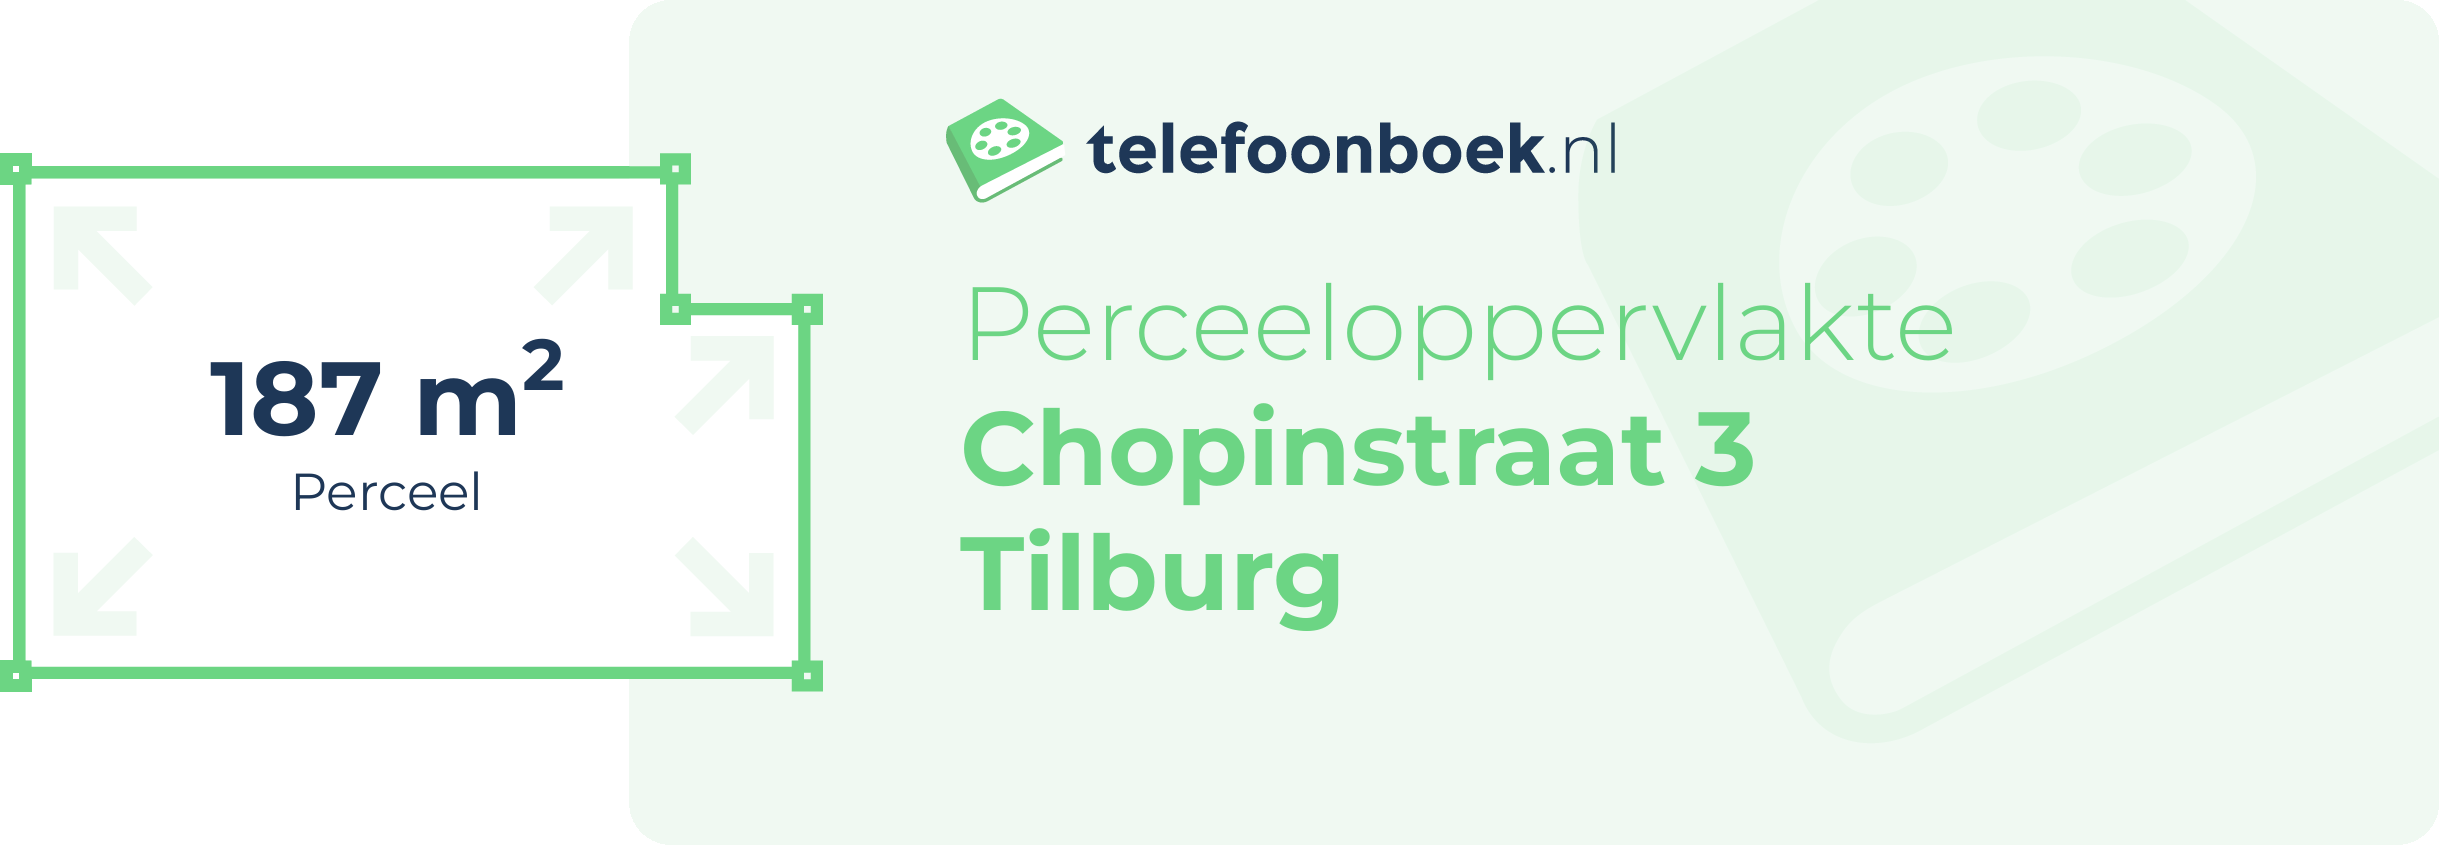 Perceeloppervlakte Chopinstraat 3 Tilburg